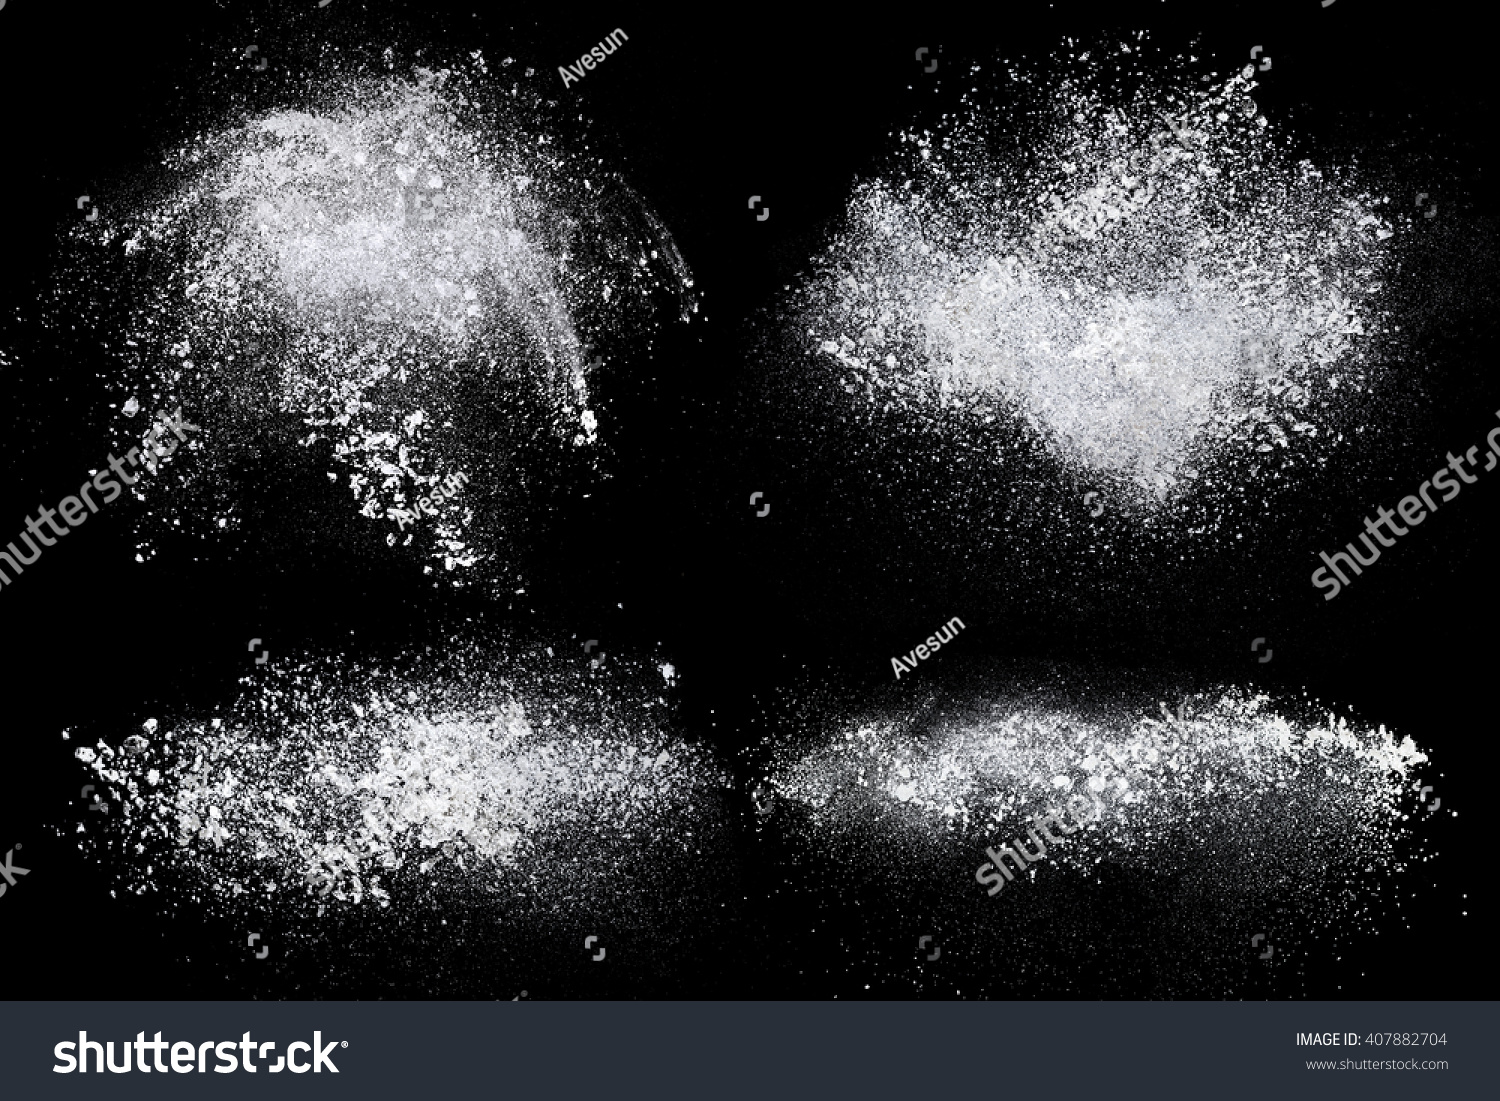 Set of dust powder splash clouds isolated on black background #407882704